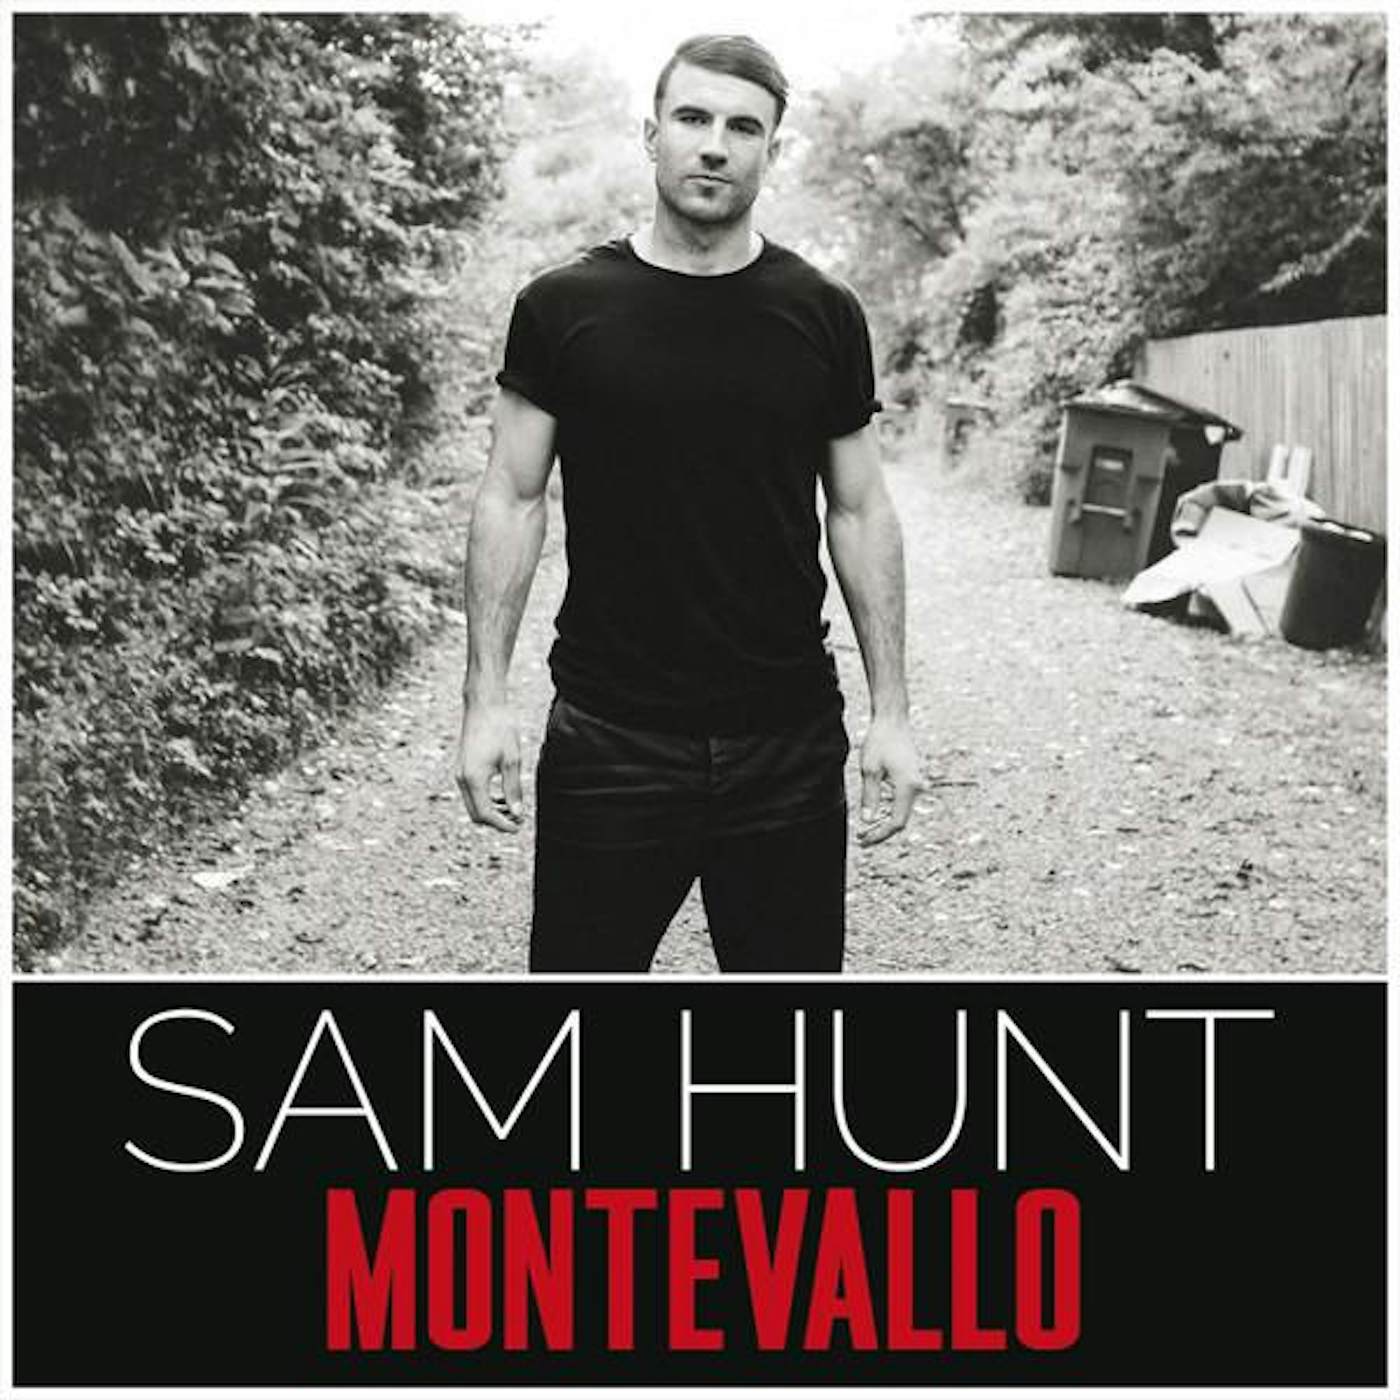 Sam Hunt MONTEVALLO Vinyl Record